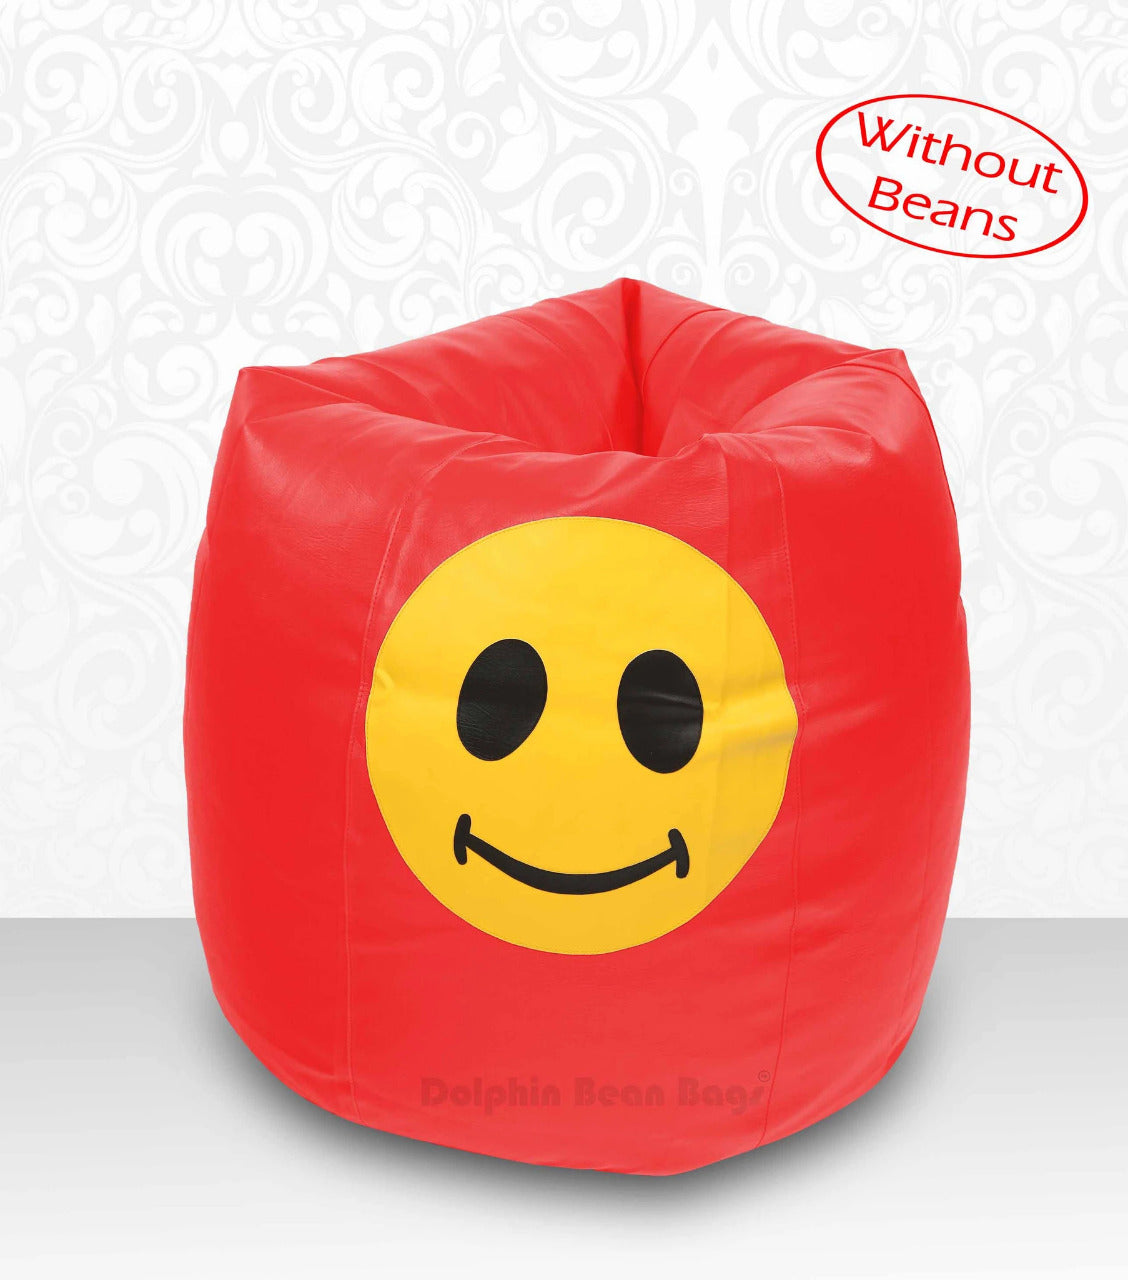 Bean Bag: XXL Bean Bag Cute-Smiley-Cover (Without Beans)